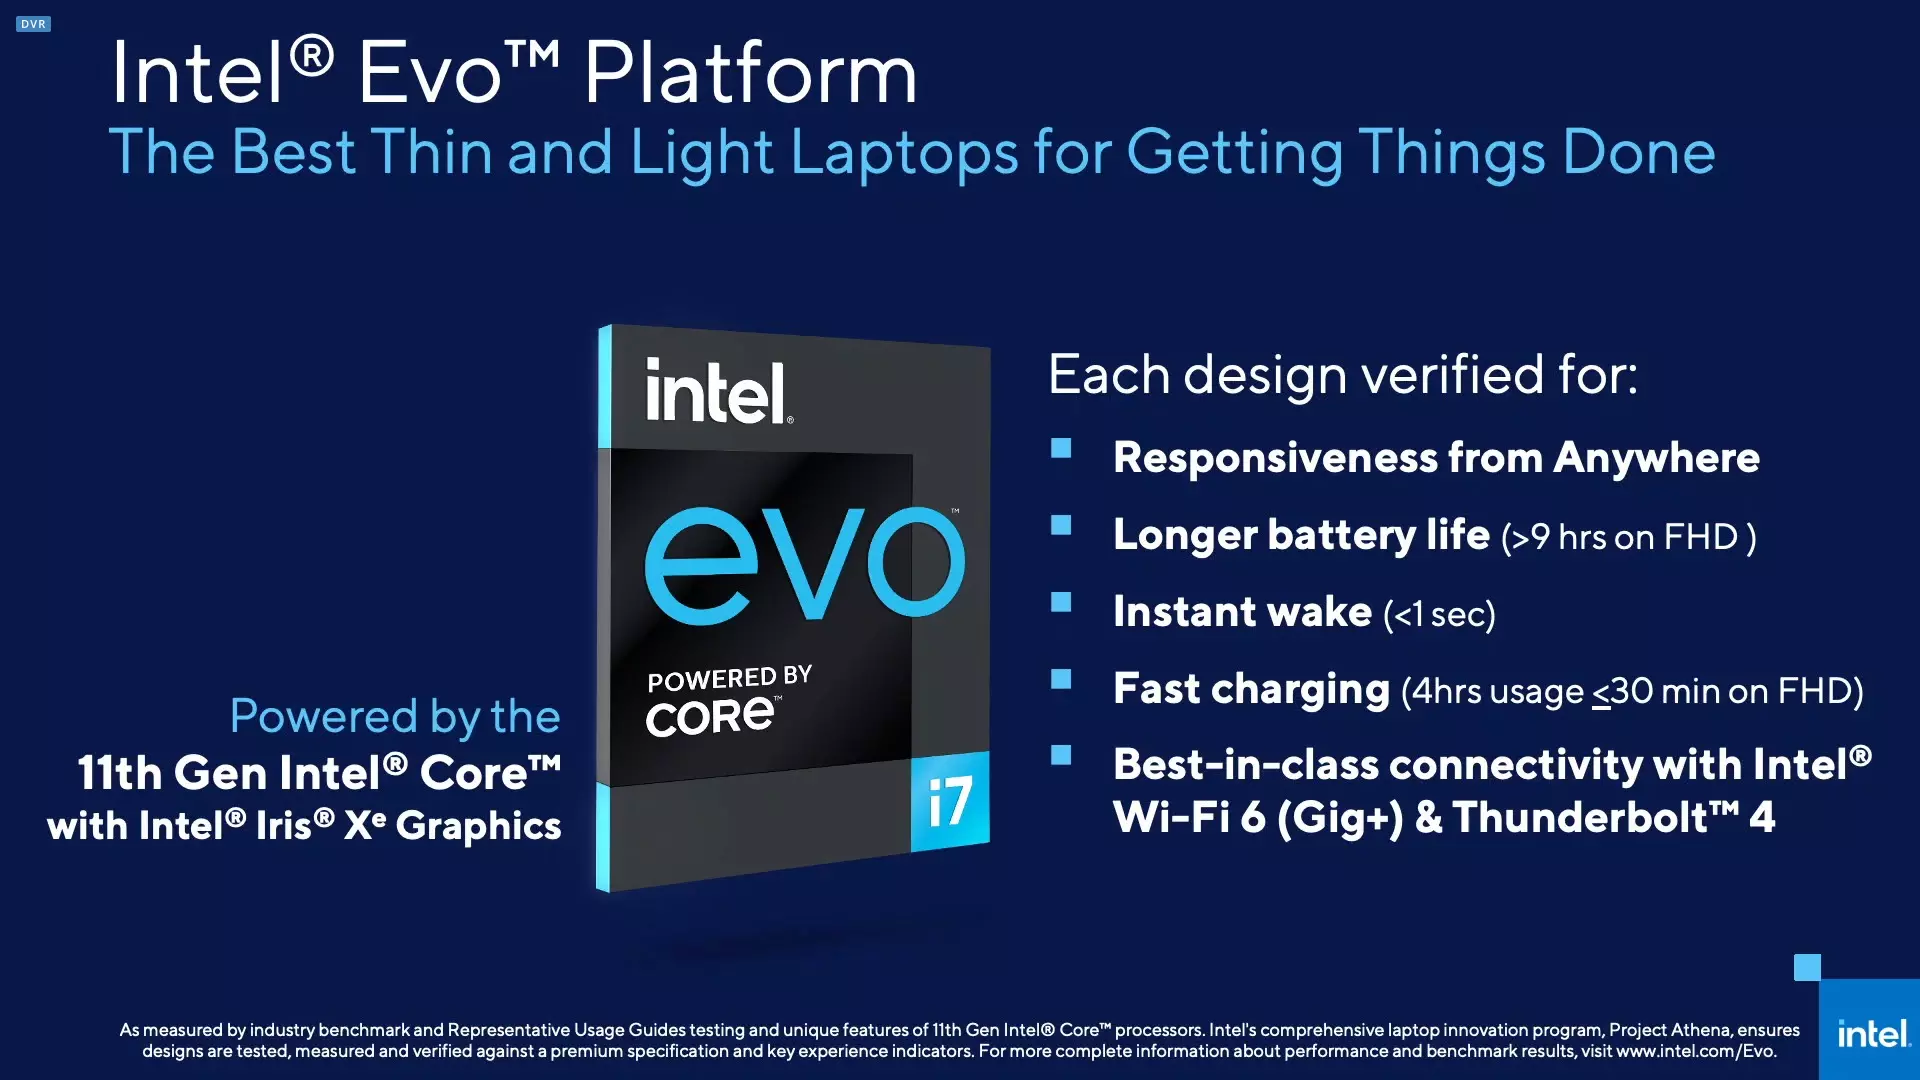 Intel Evo edition